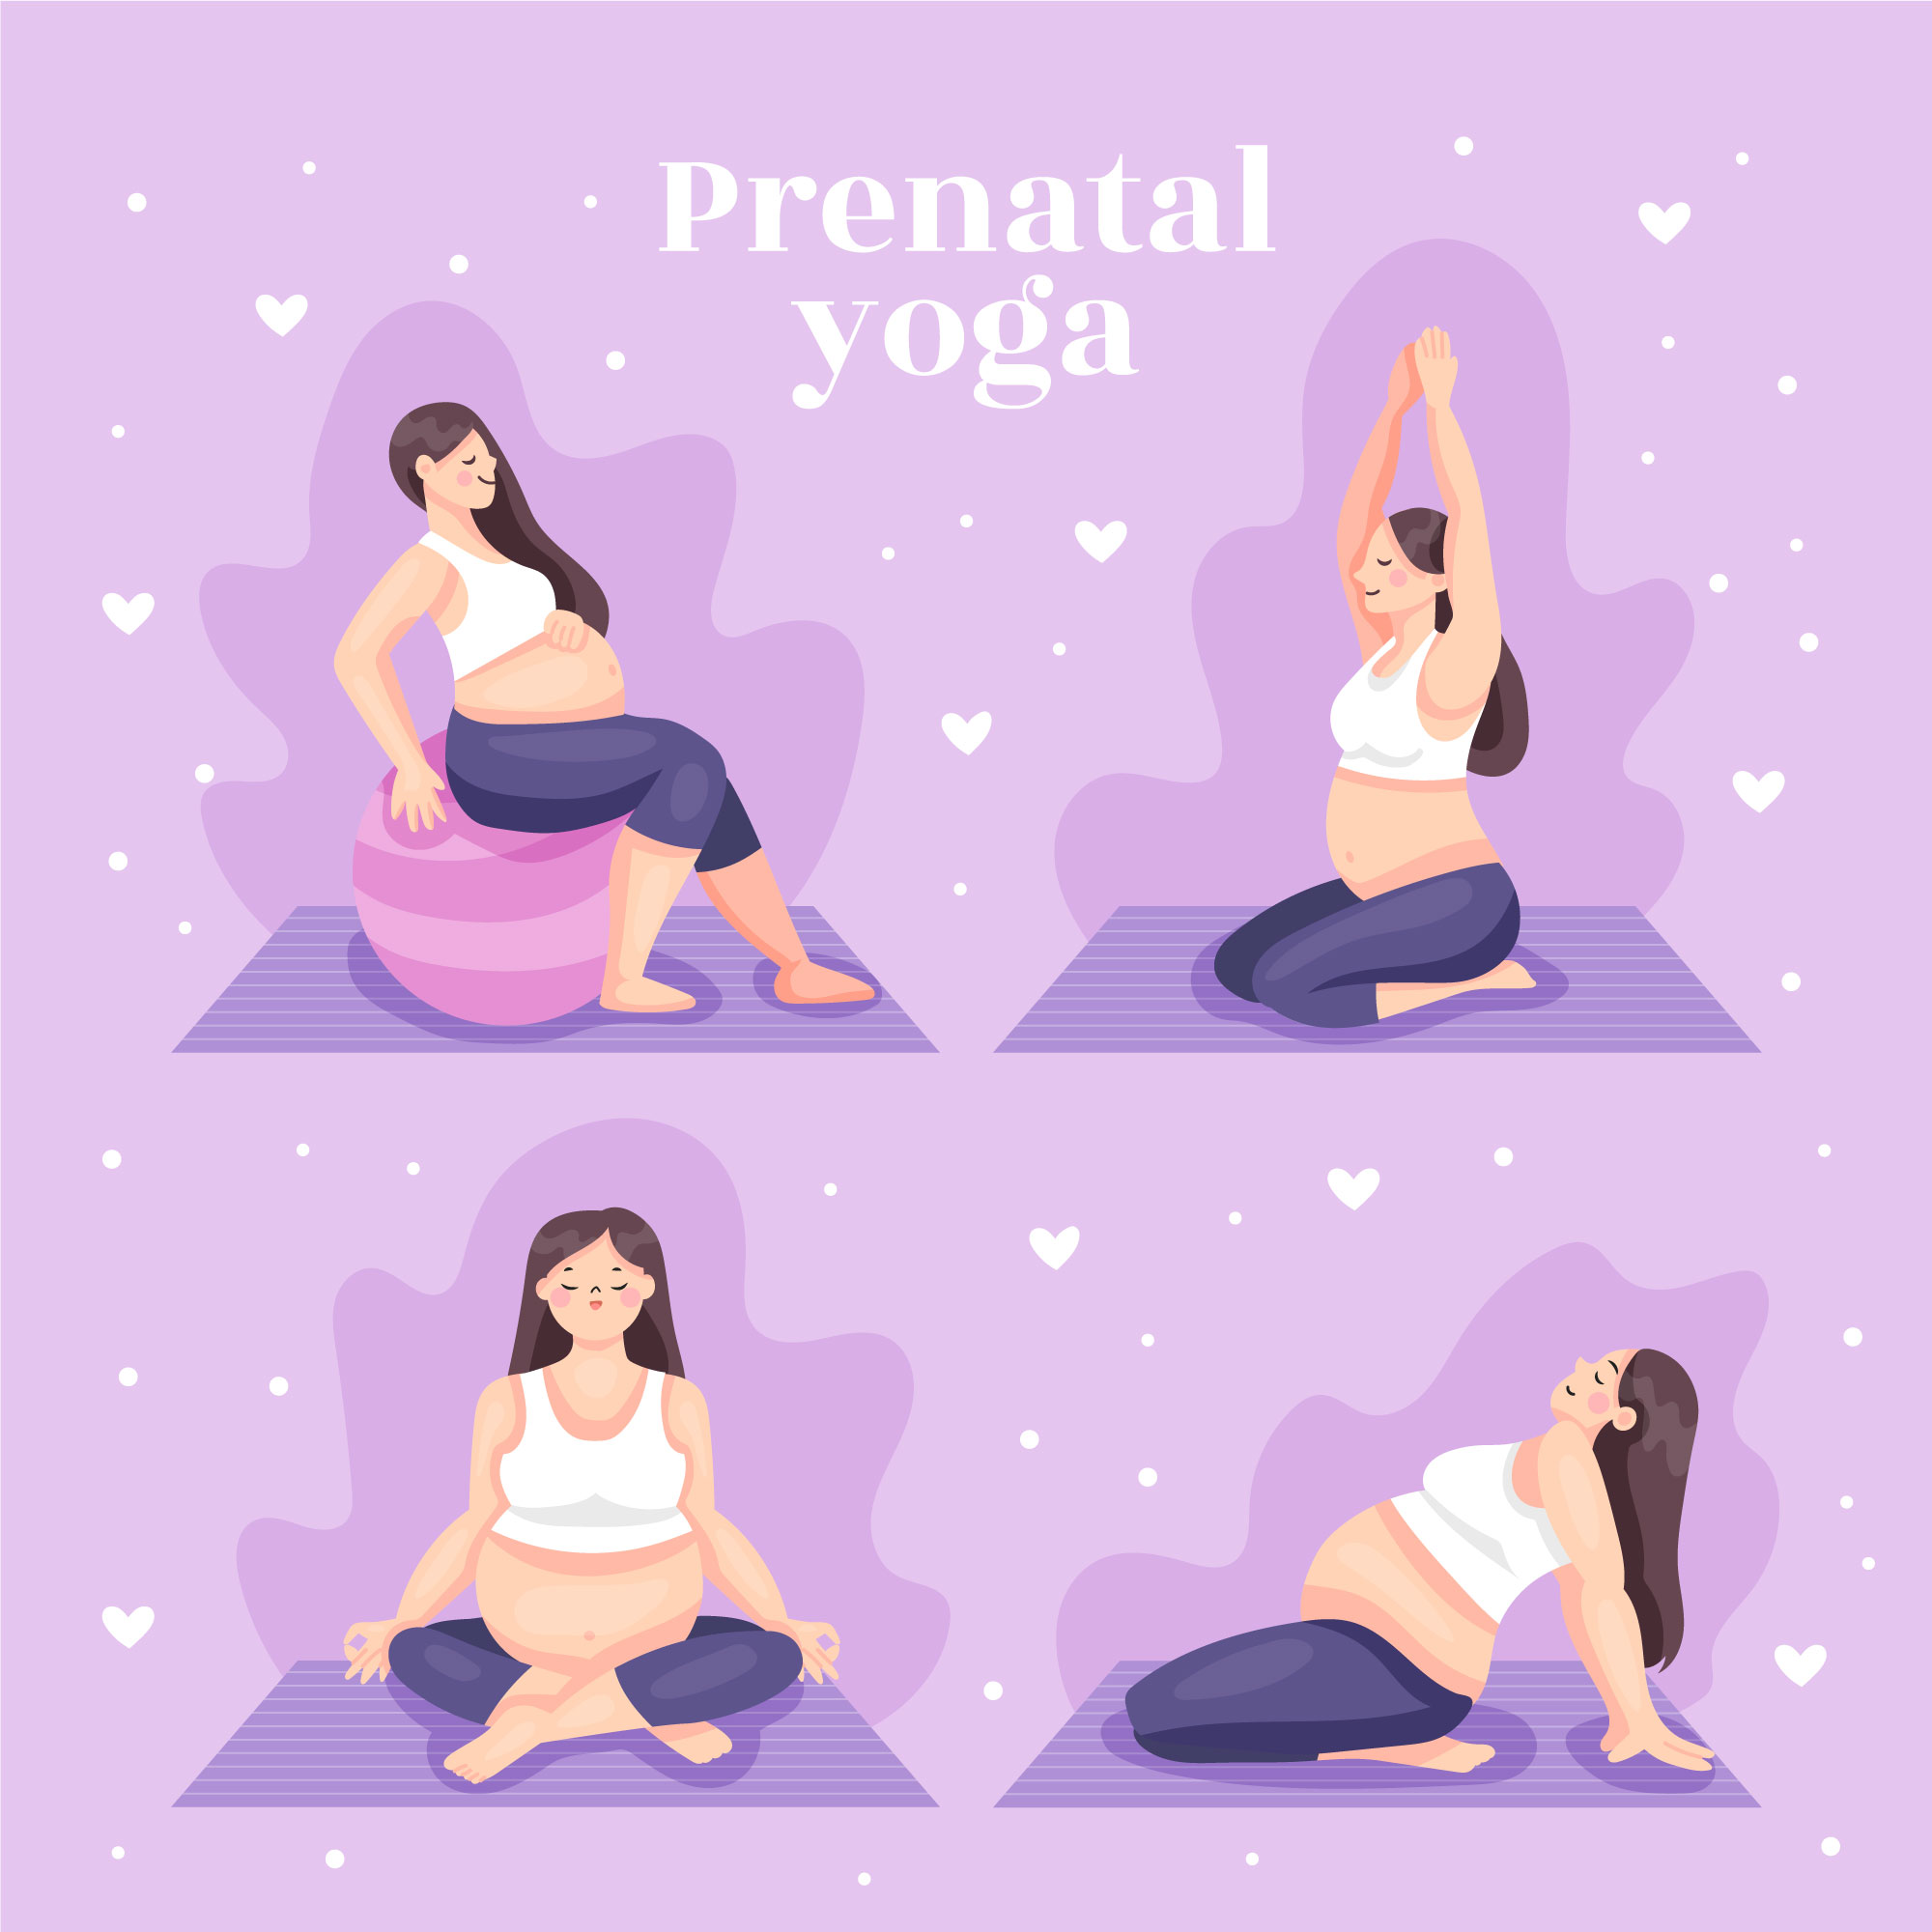 Why do pregnant women not go to prenatal yoga? - Quora